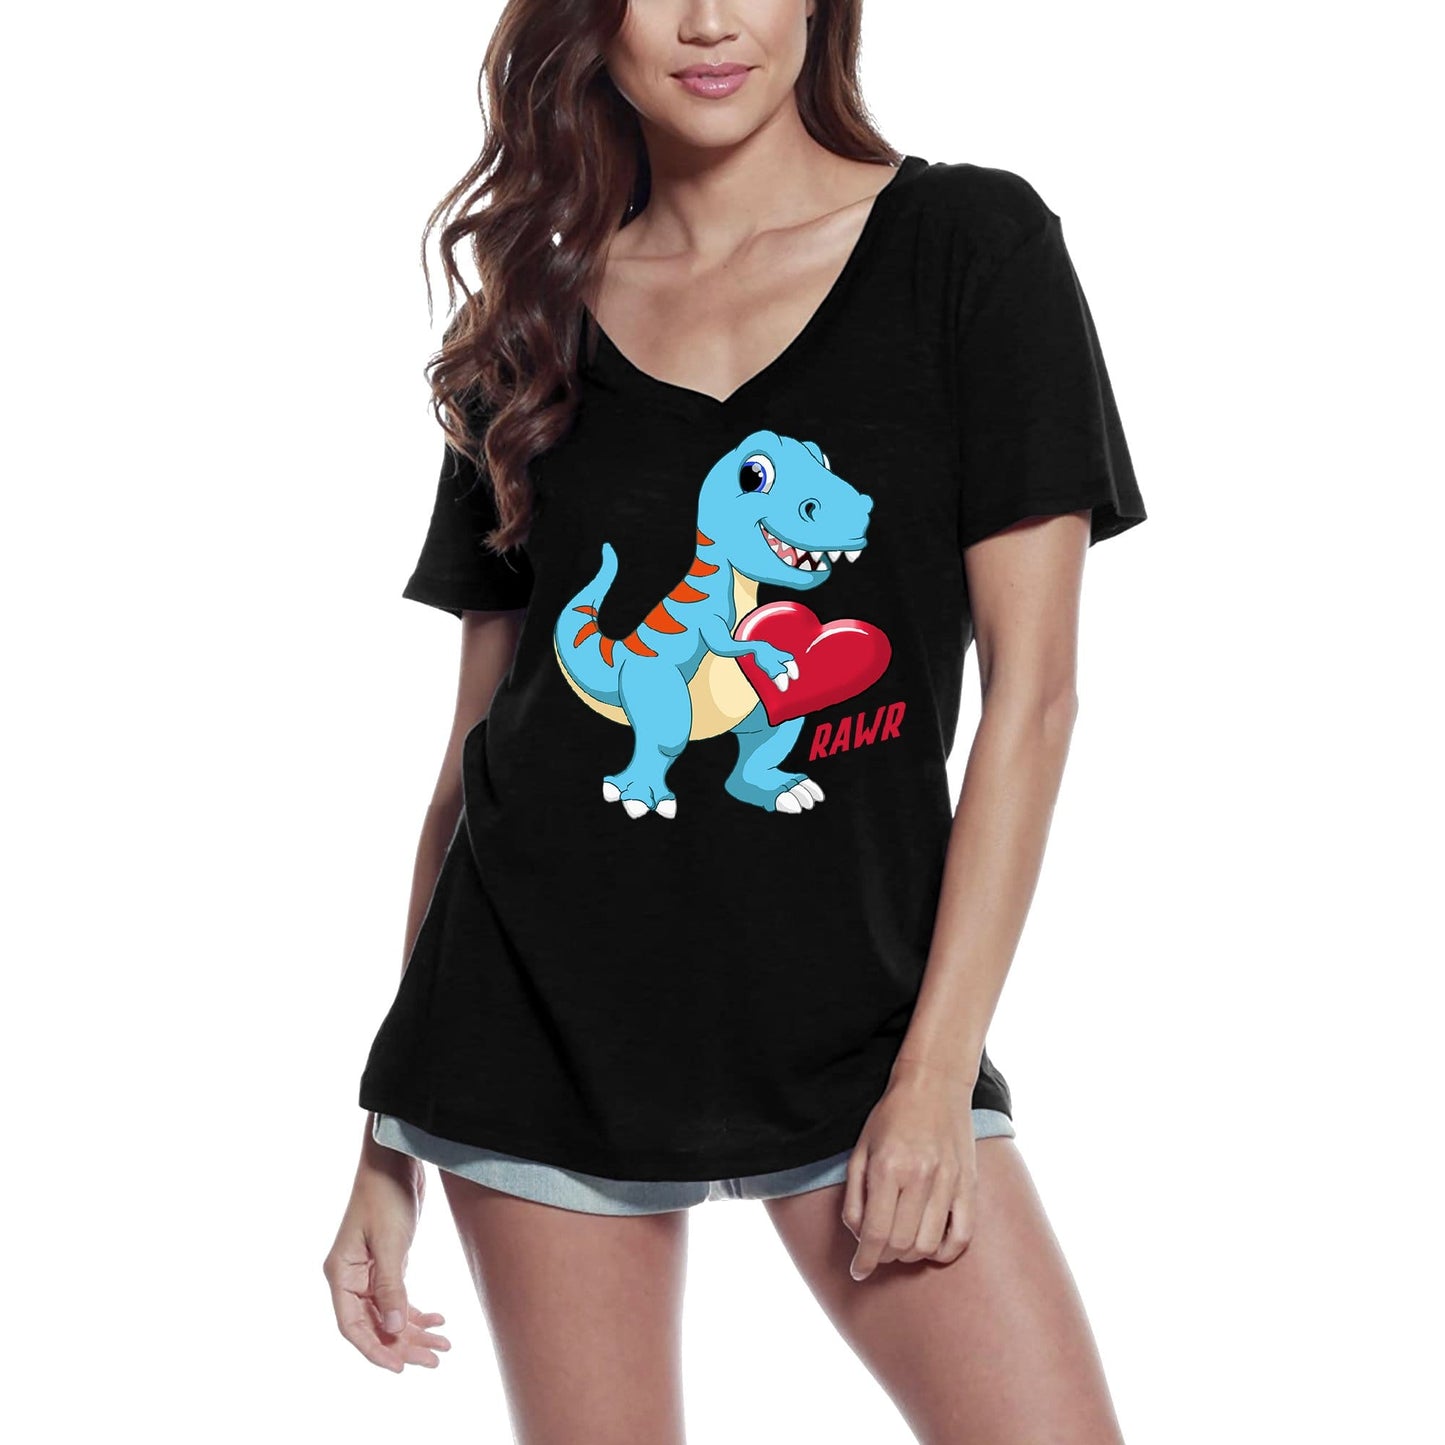 ULTRABASIC Women's T-Shirt Cute T-Rex Dinosaur Rawr - Love Short Sleeve Graphic Tees Tops